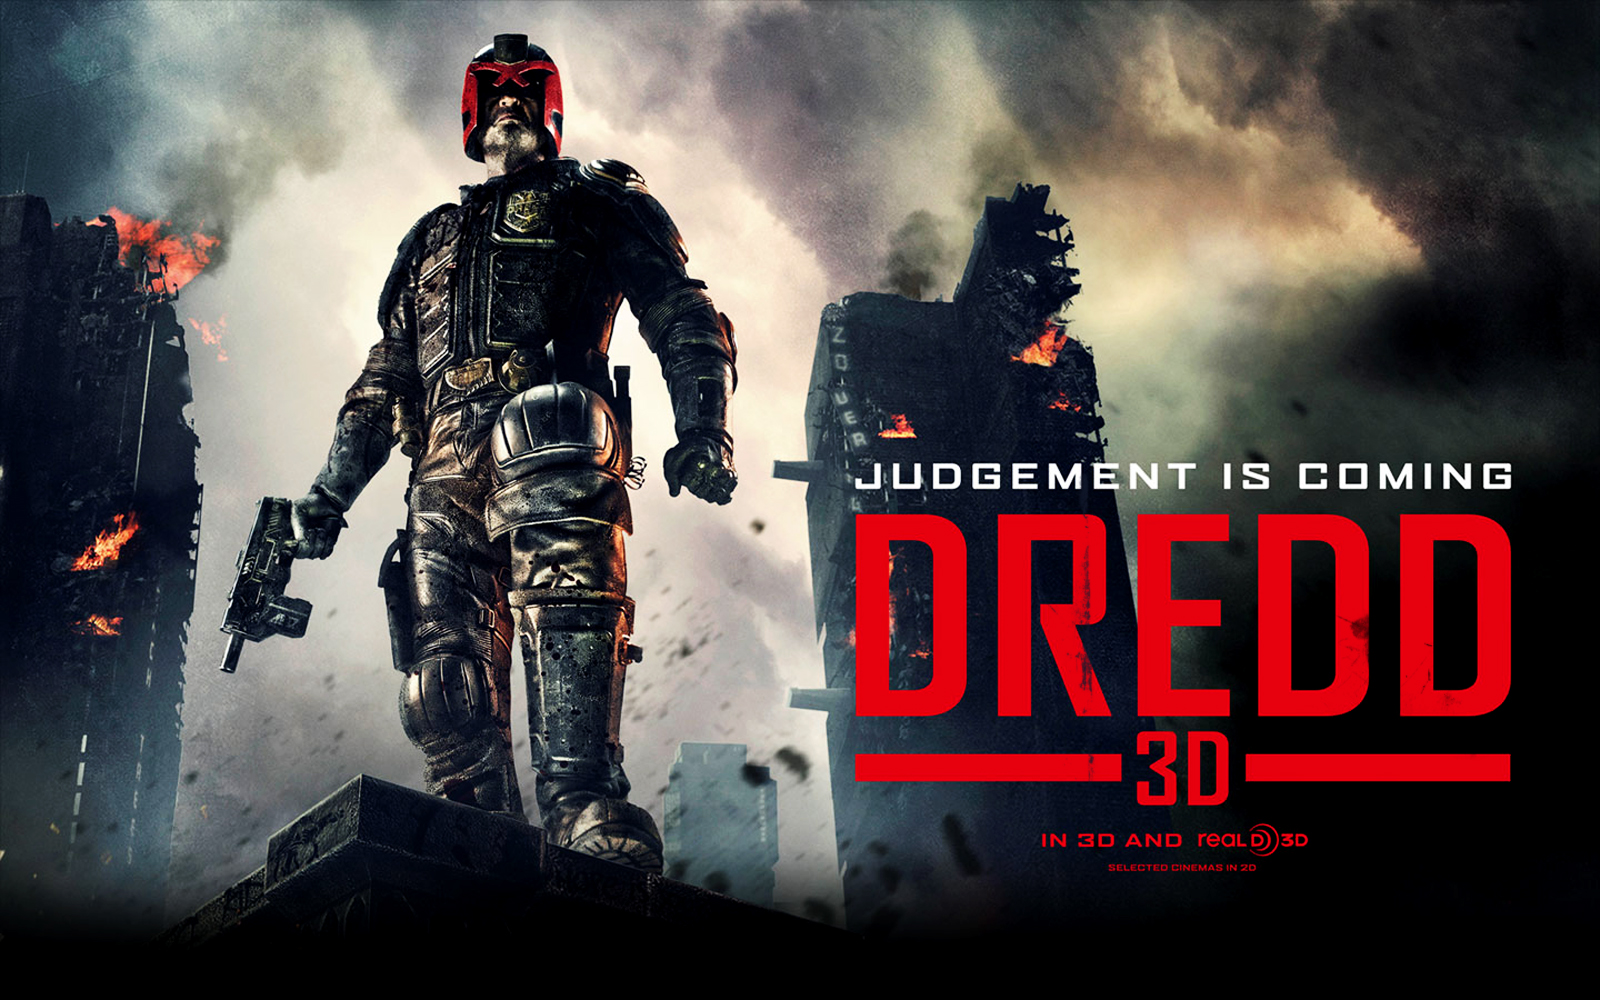 Dredd 3d Movie Poster HD Wallpaper In For